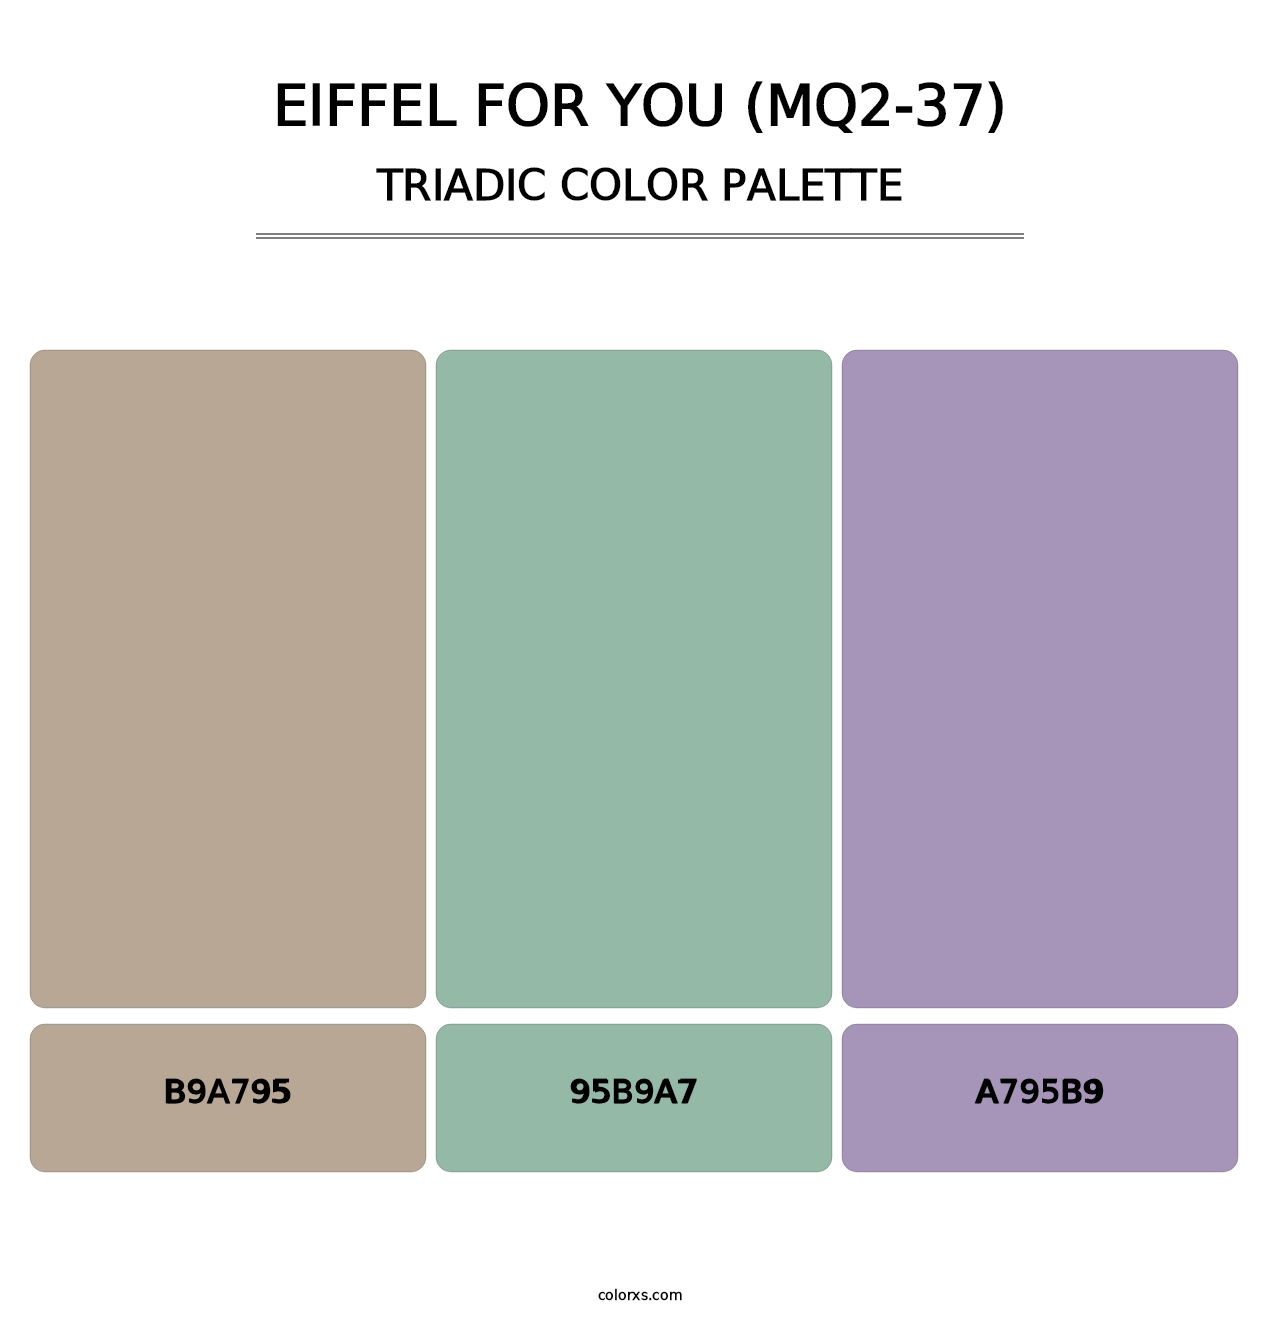 Eiffel For You (MQ2-37) - Triadic Color Palette